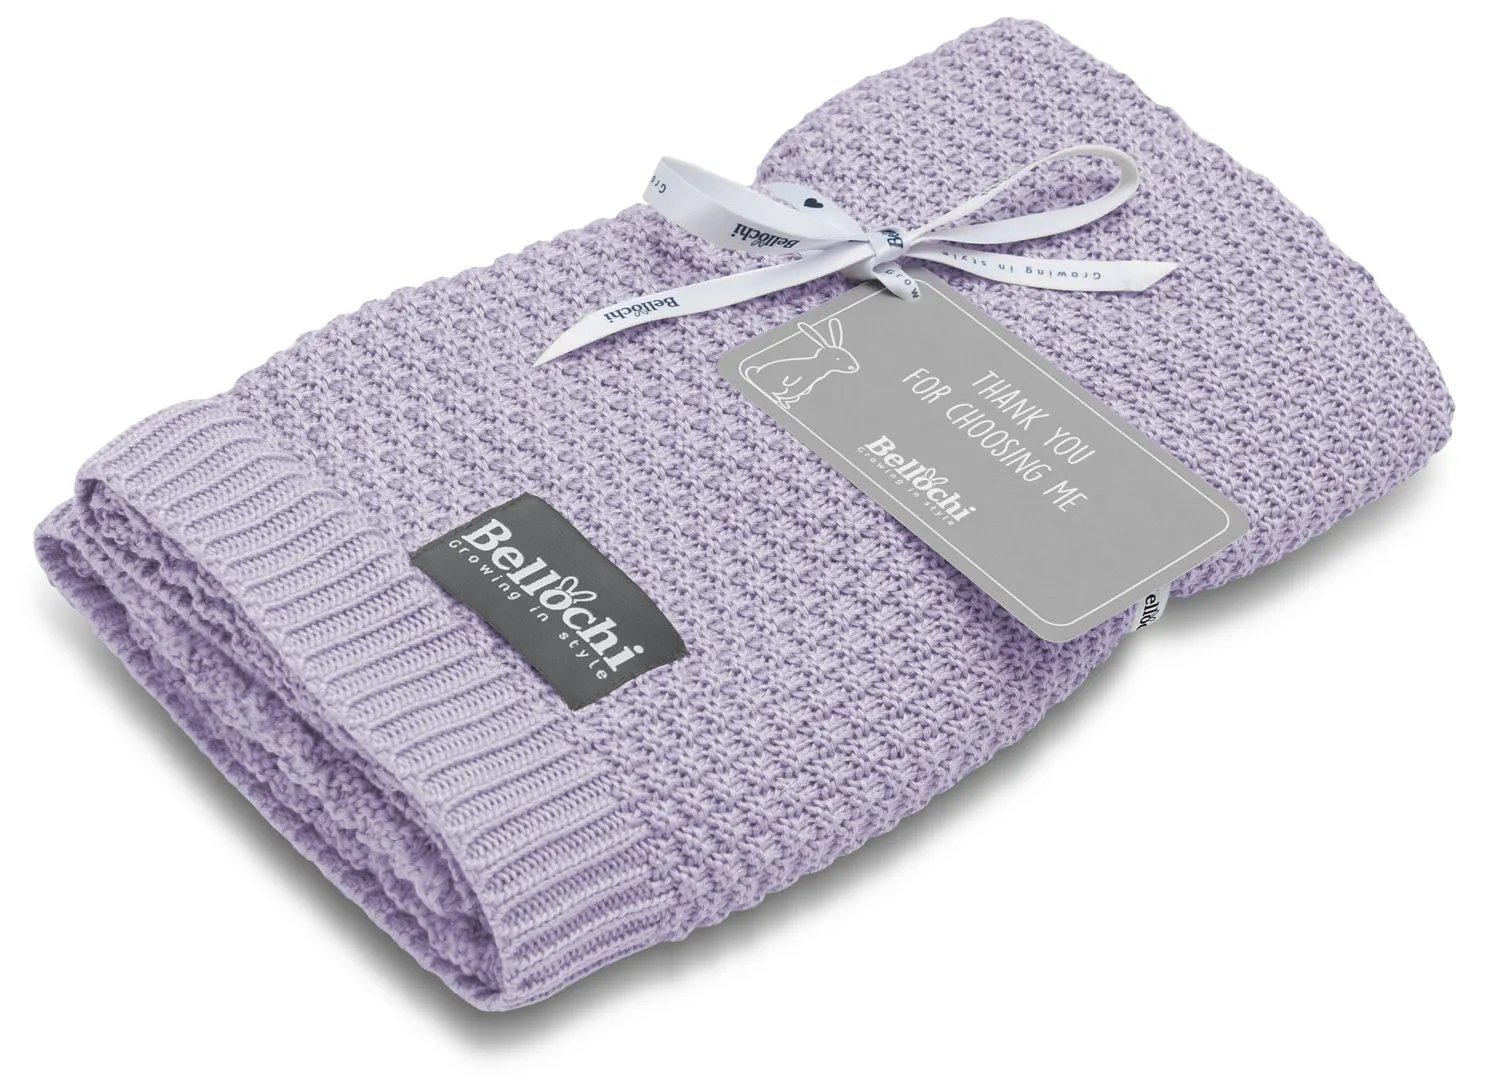 Bellochi bamboo blanket 100×80 cm lavendlove – purple 100% bamboo yarn